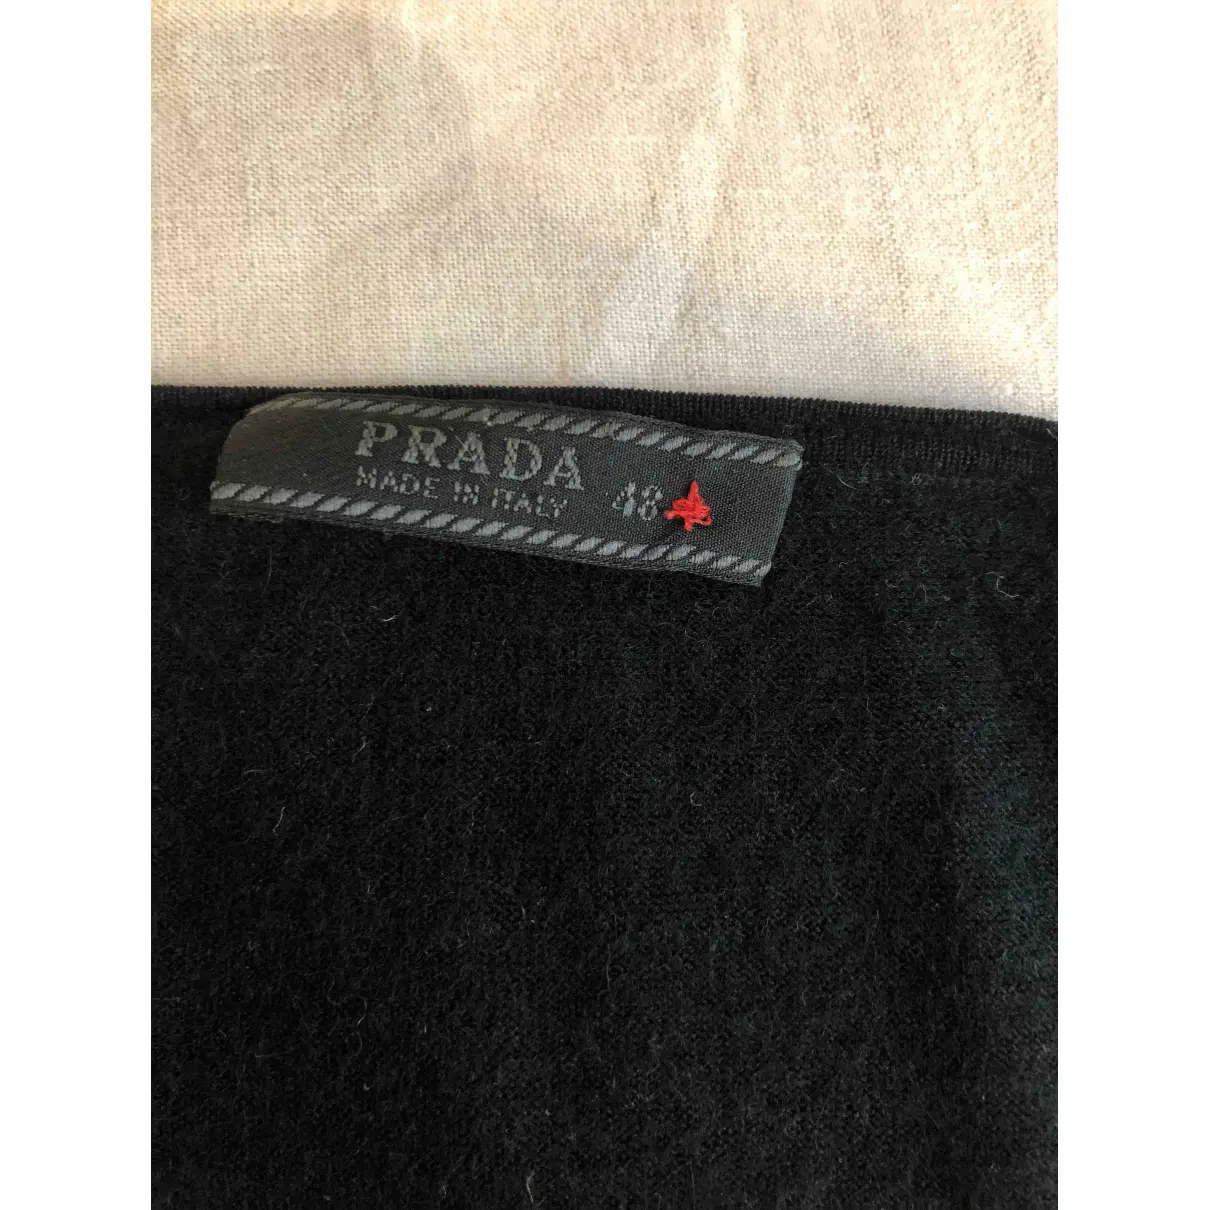 Buy Prada Cashmere pull online